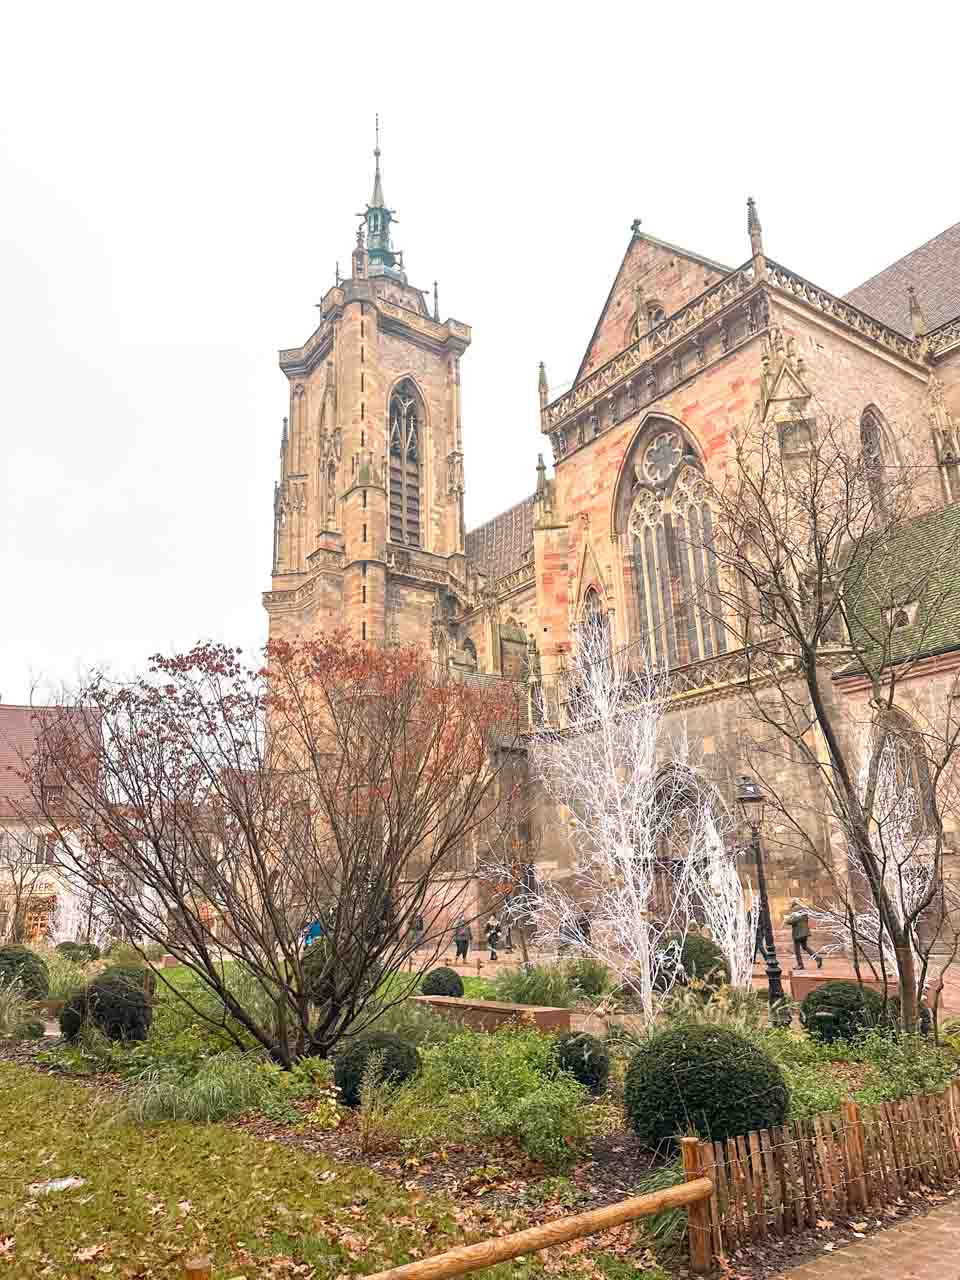 A view of the Collegiate Church Saint-Martin in Colmar